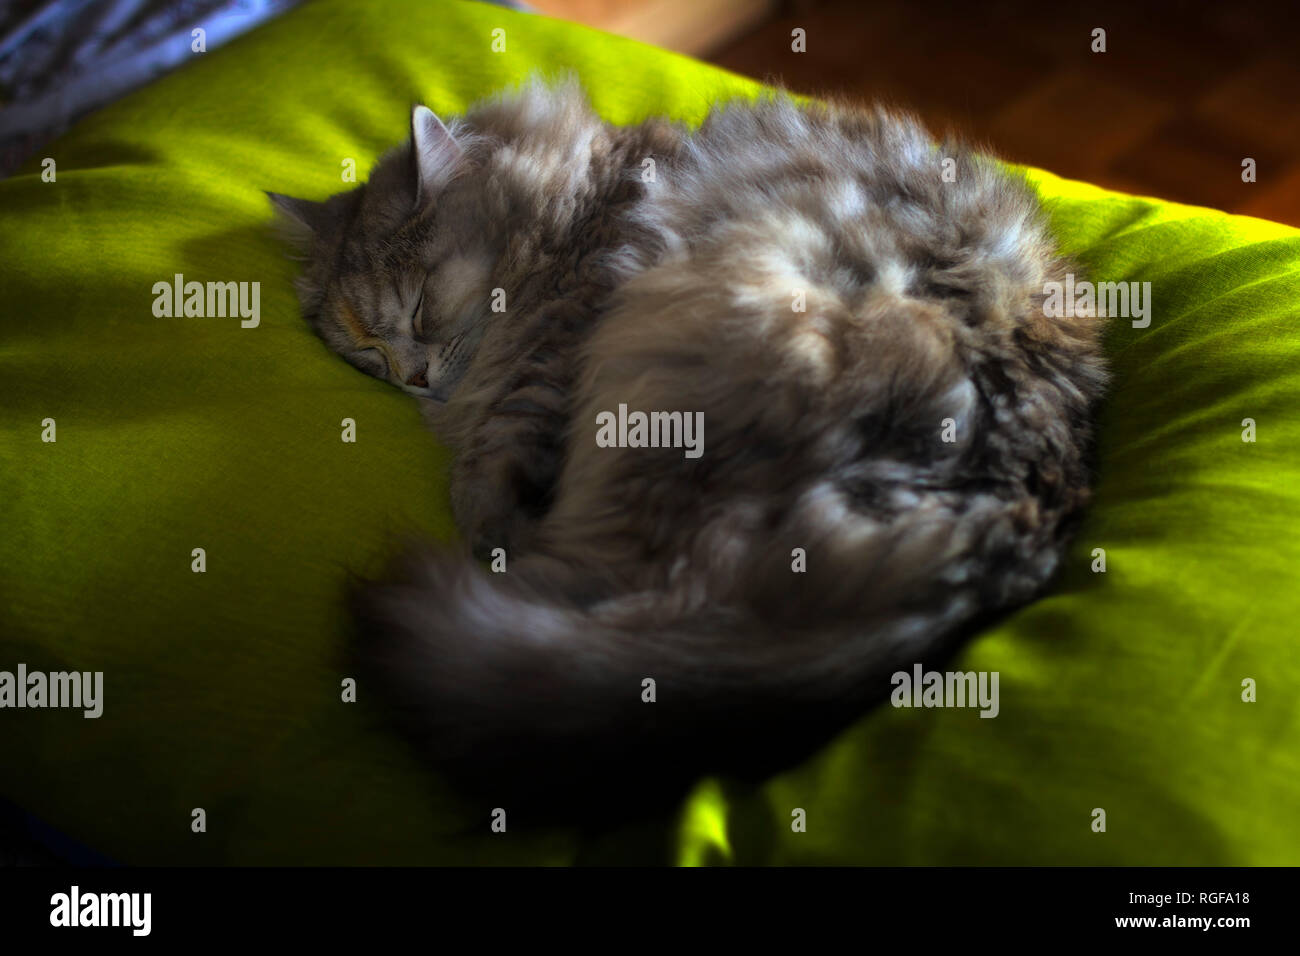 A Siberian female cat is sleeping on a green blanket. Stock Photo